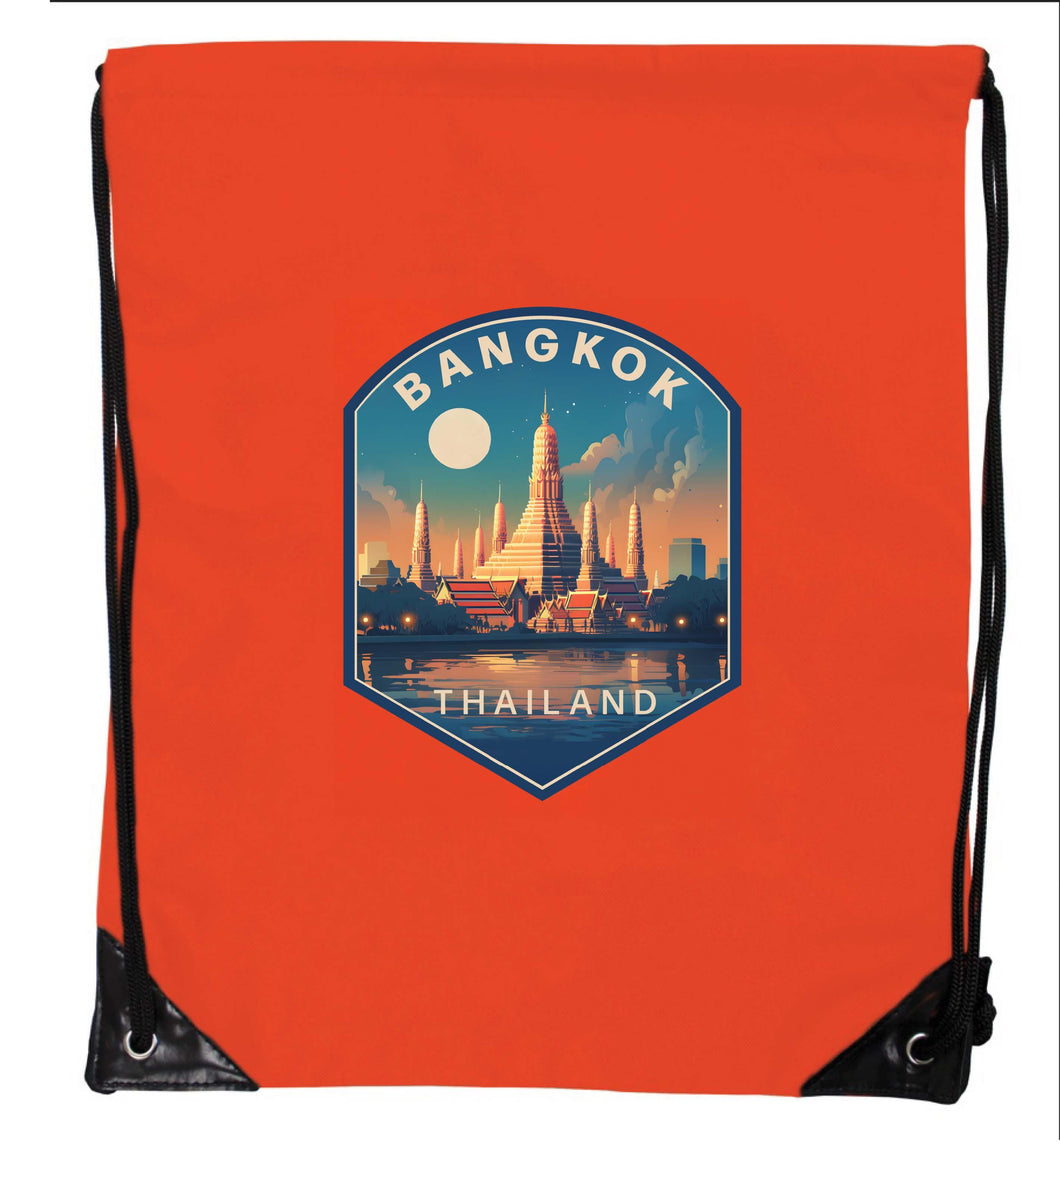 Bangkok Thailand B Souvenir Cinch Bag with Drawstring Backpack